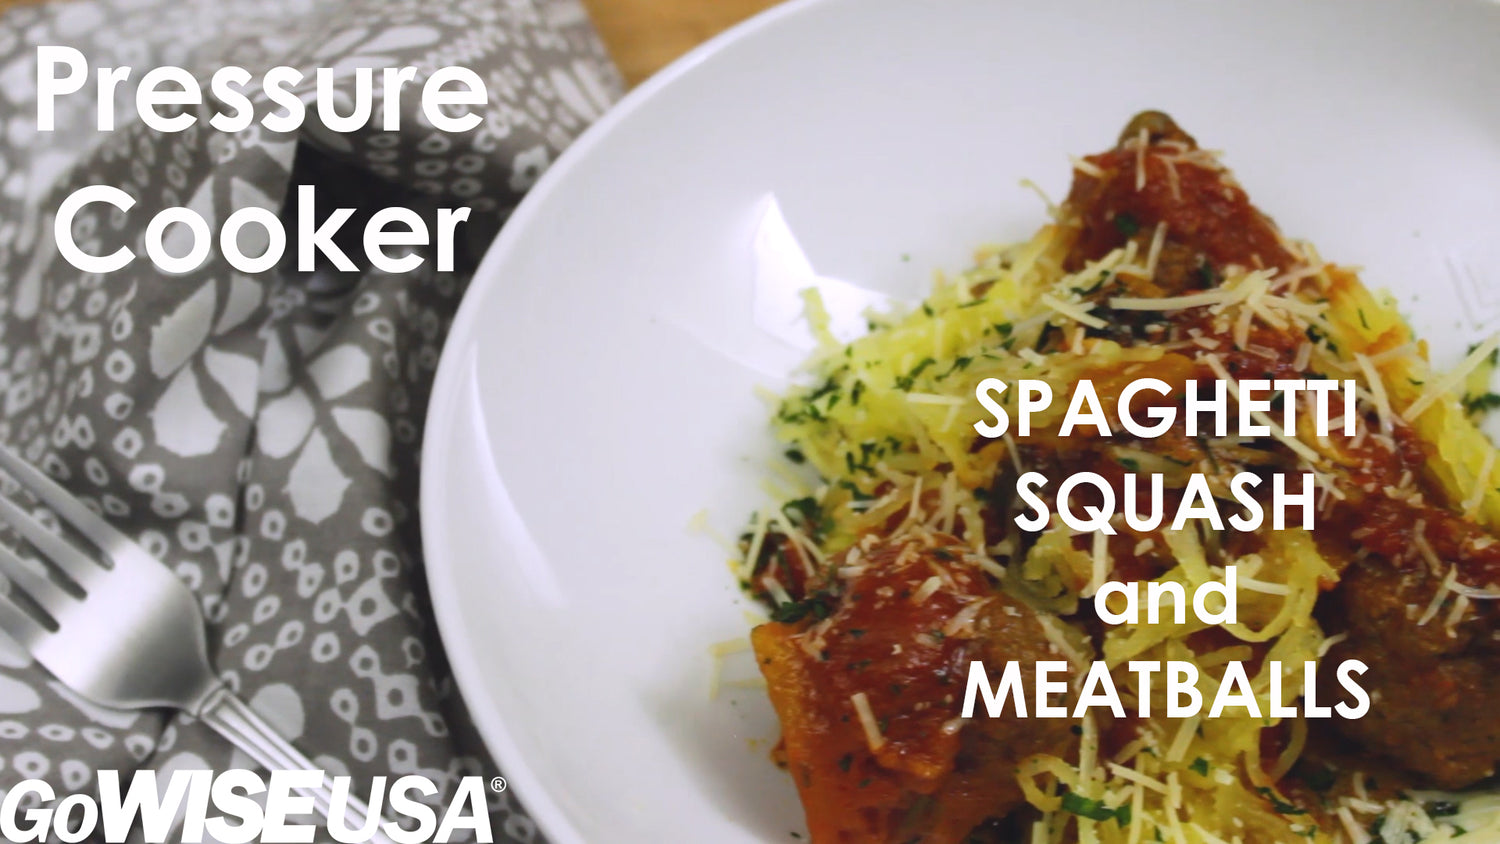 Spaghetti Squash and Meatballs Made in the Pressure Cooker